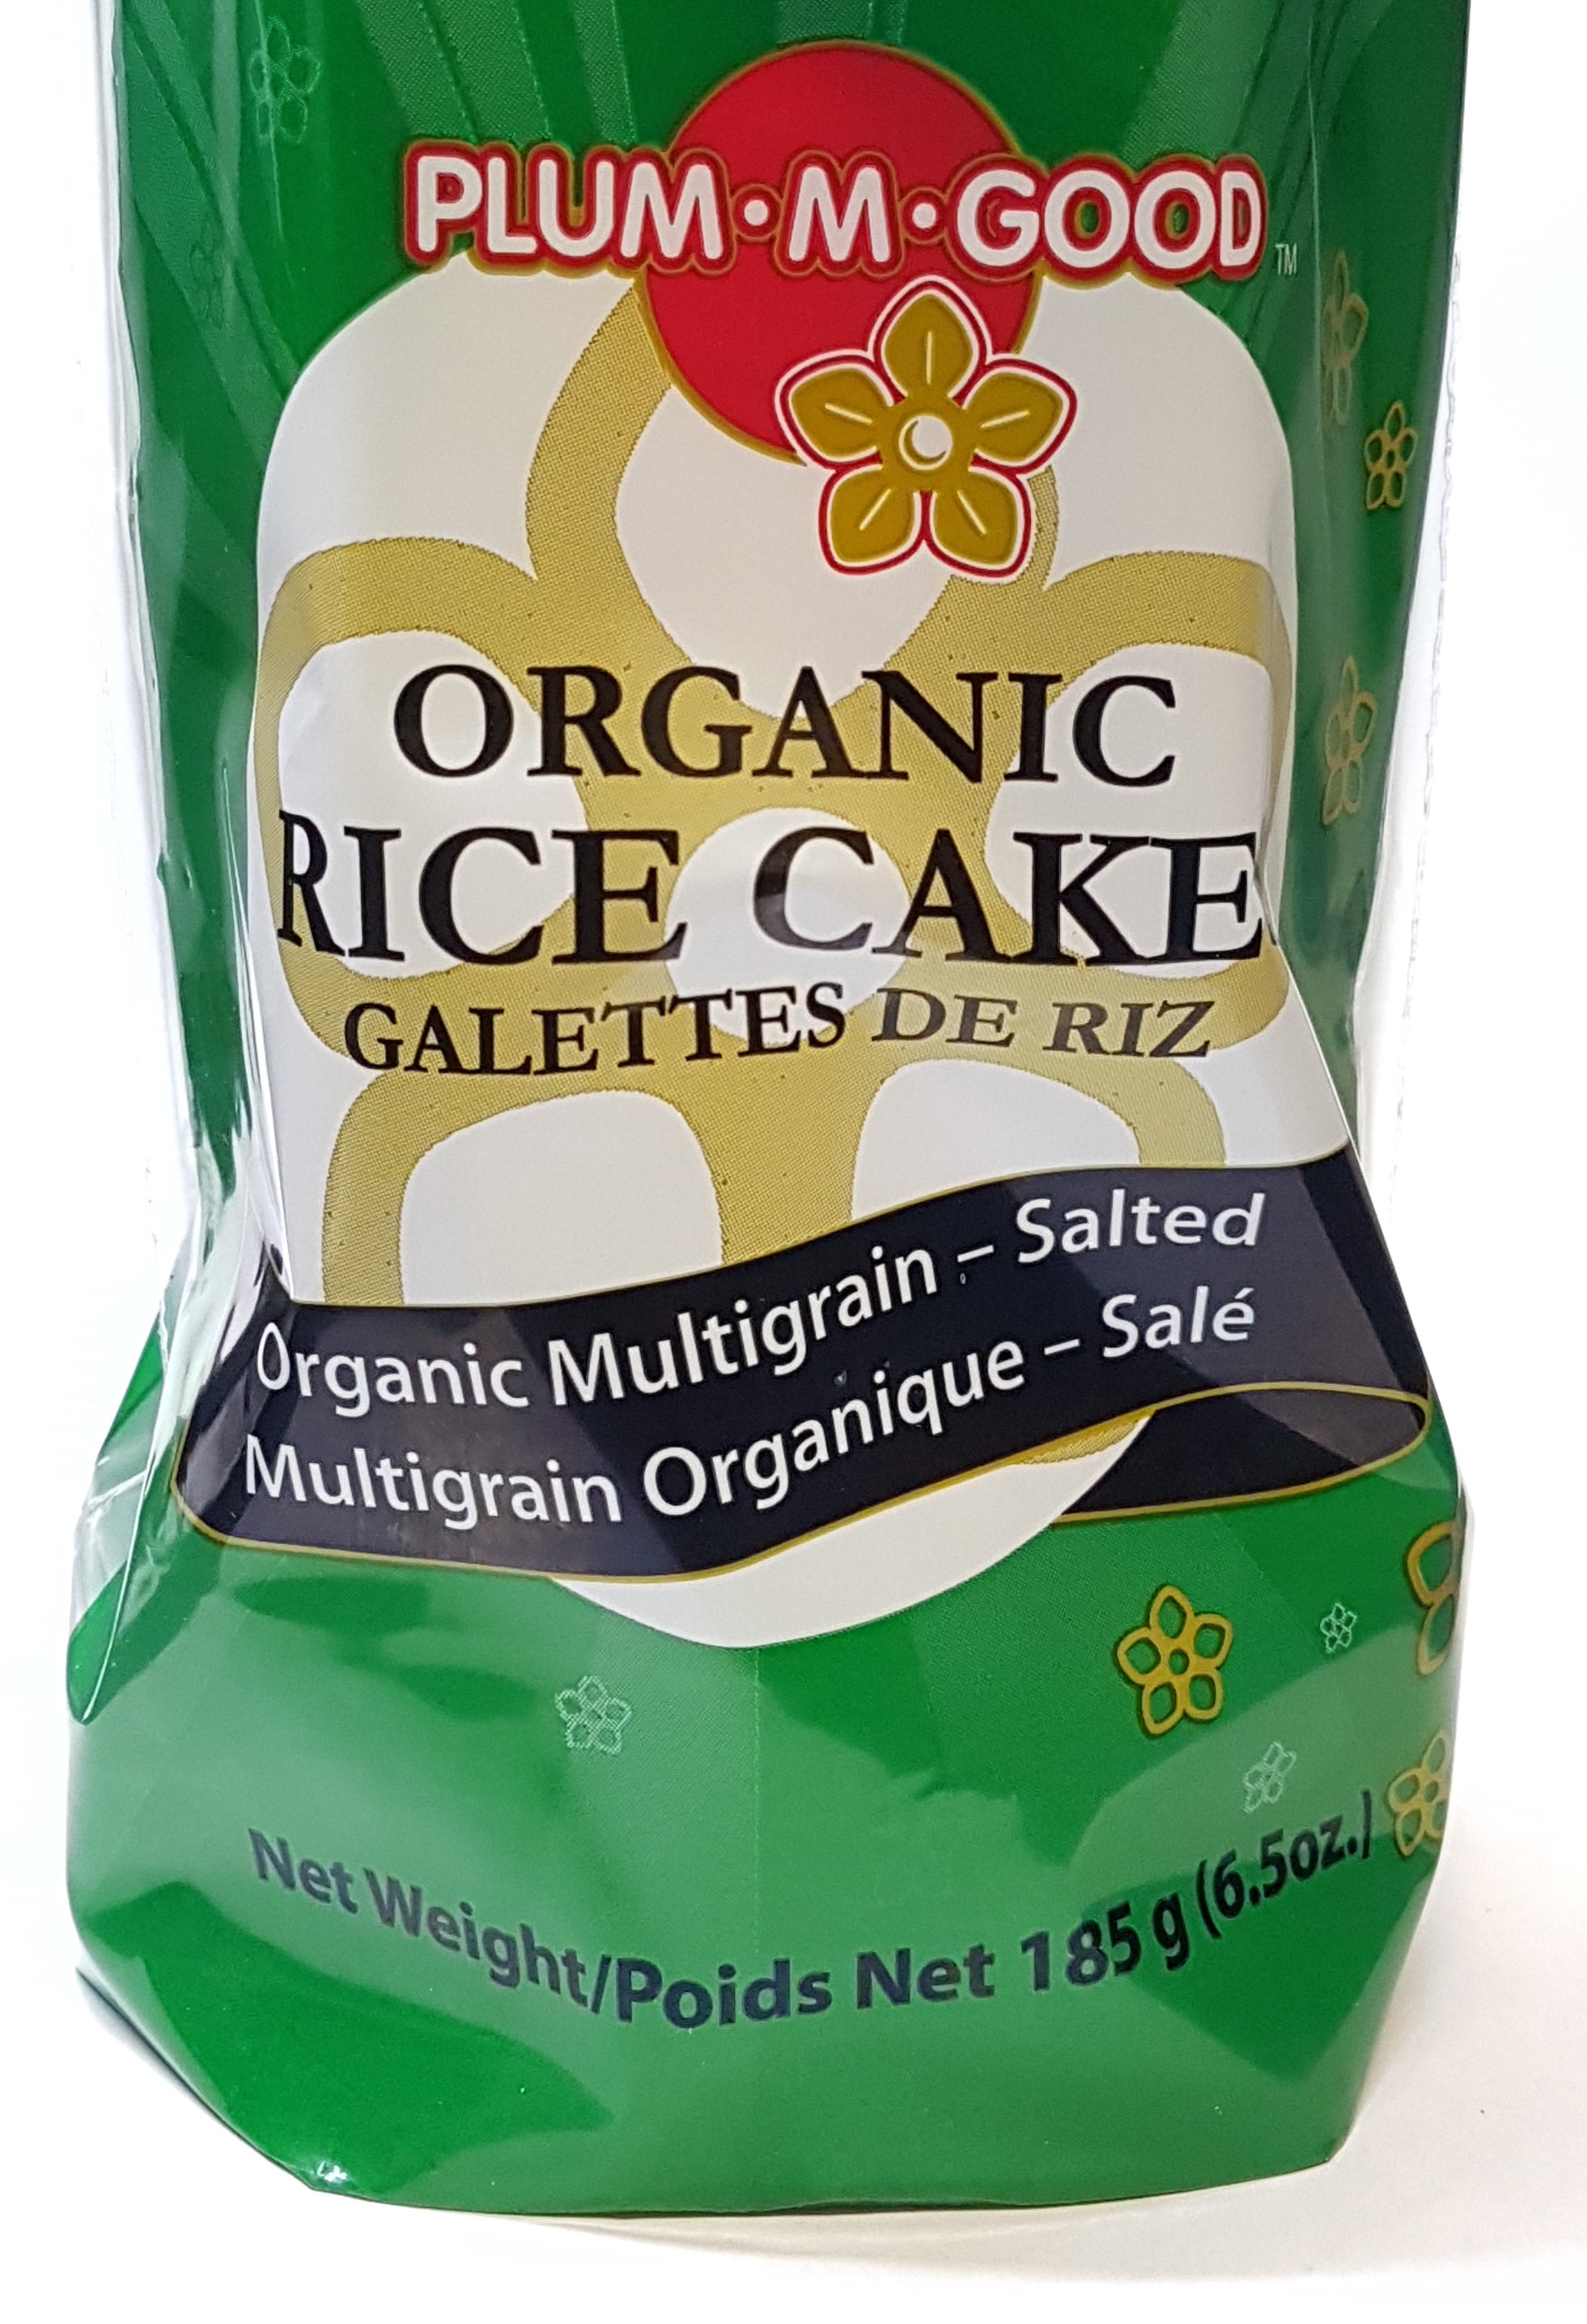 Plum M Good Organic Multigrain Rice Cake - Salted (185g) - Lifestyle Markets